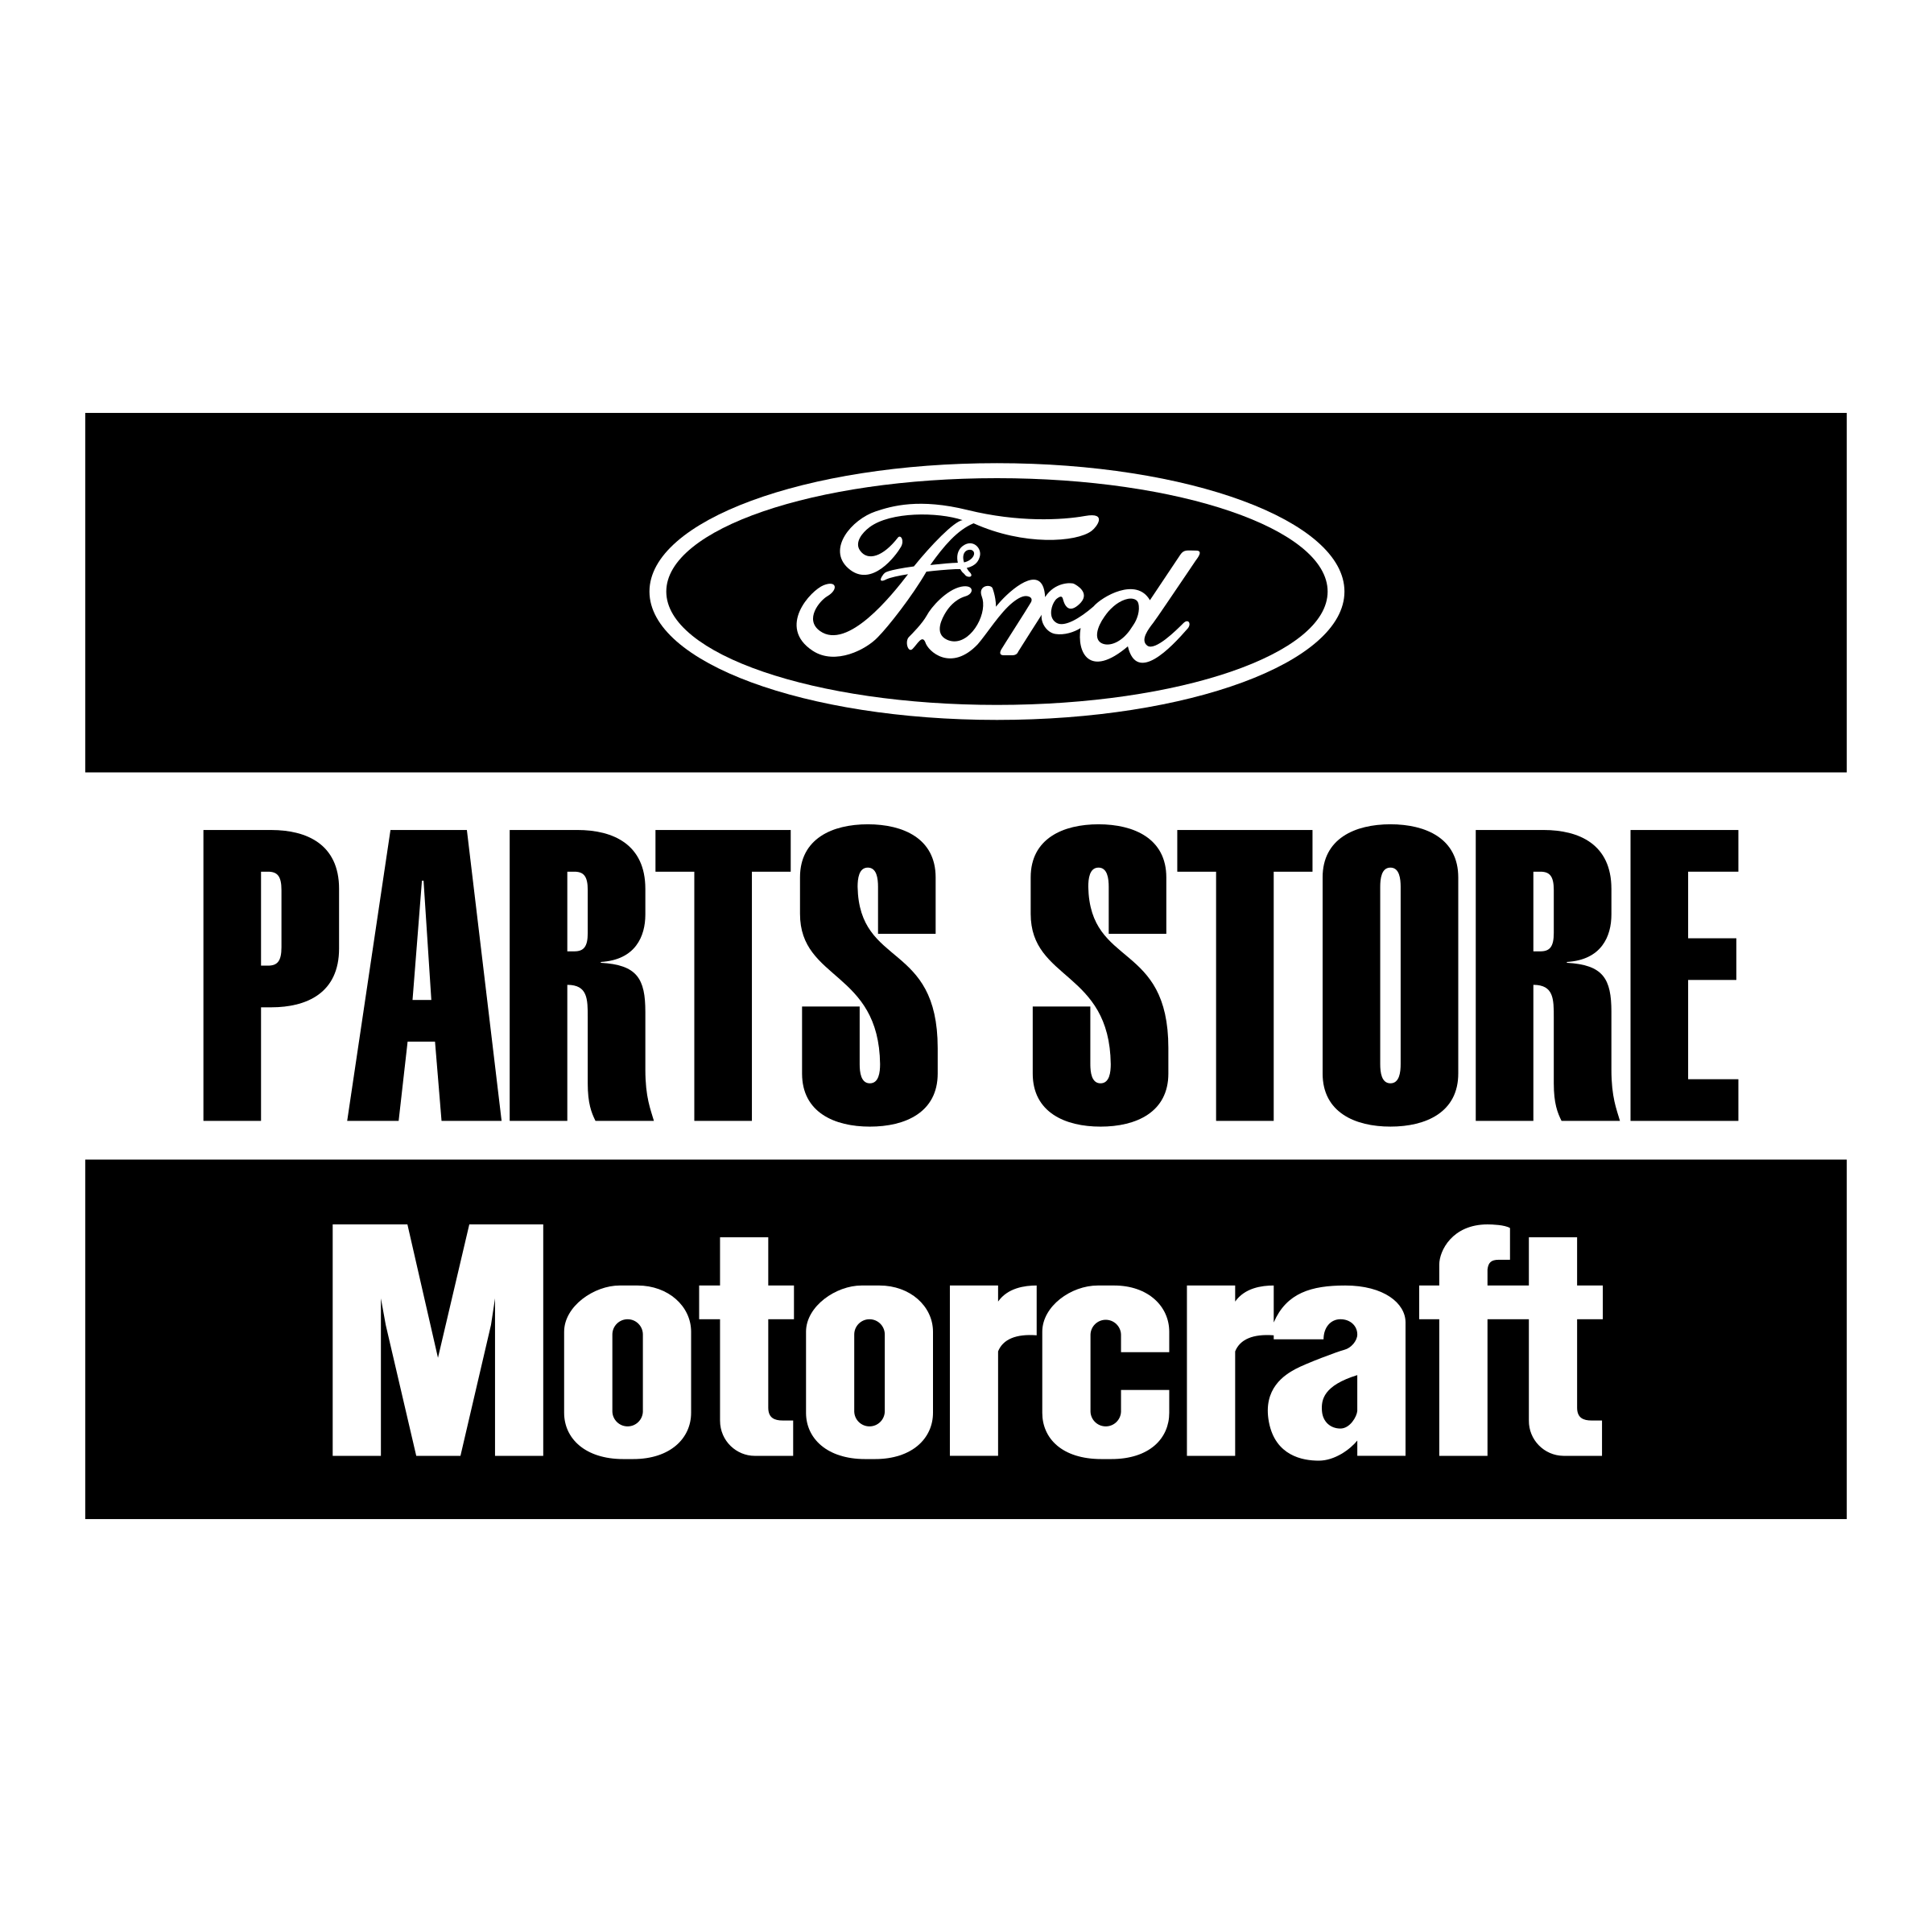 Motorcraft Logo - Motorcraft Logo PNG Transparent & SVG Vector - Freebie Supply